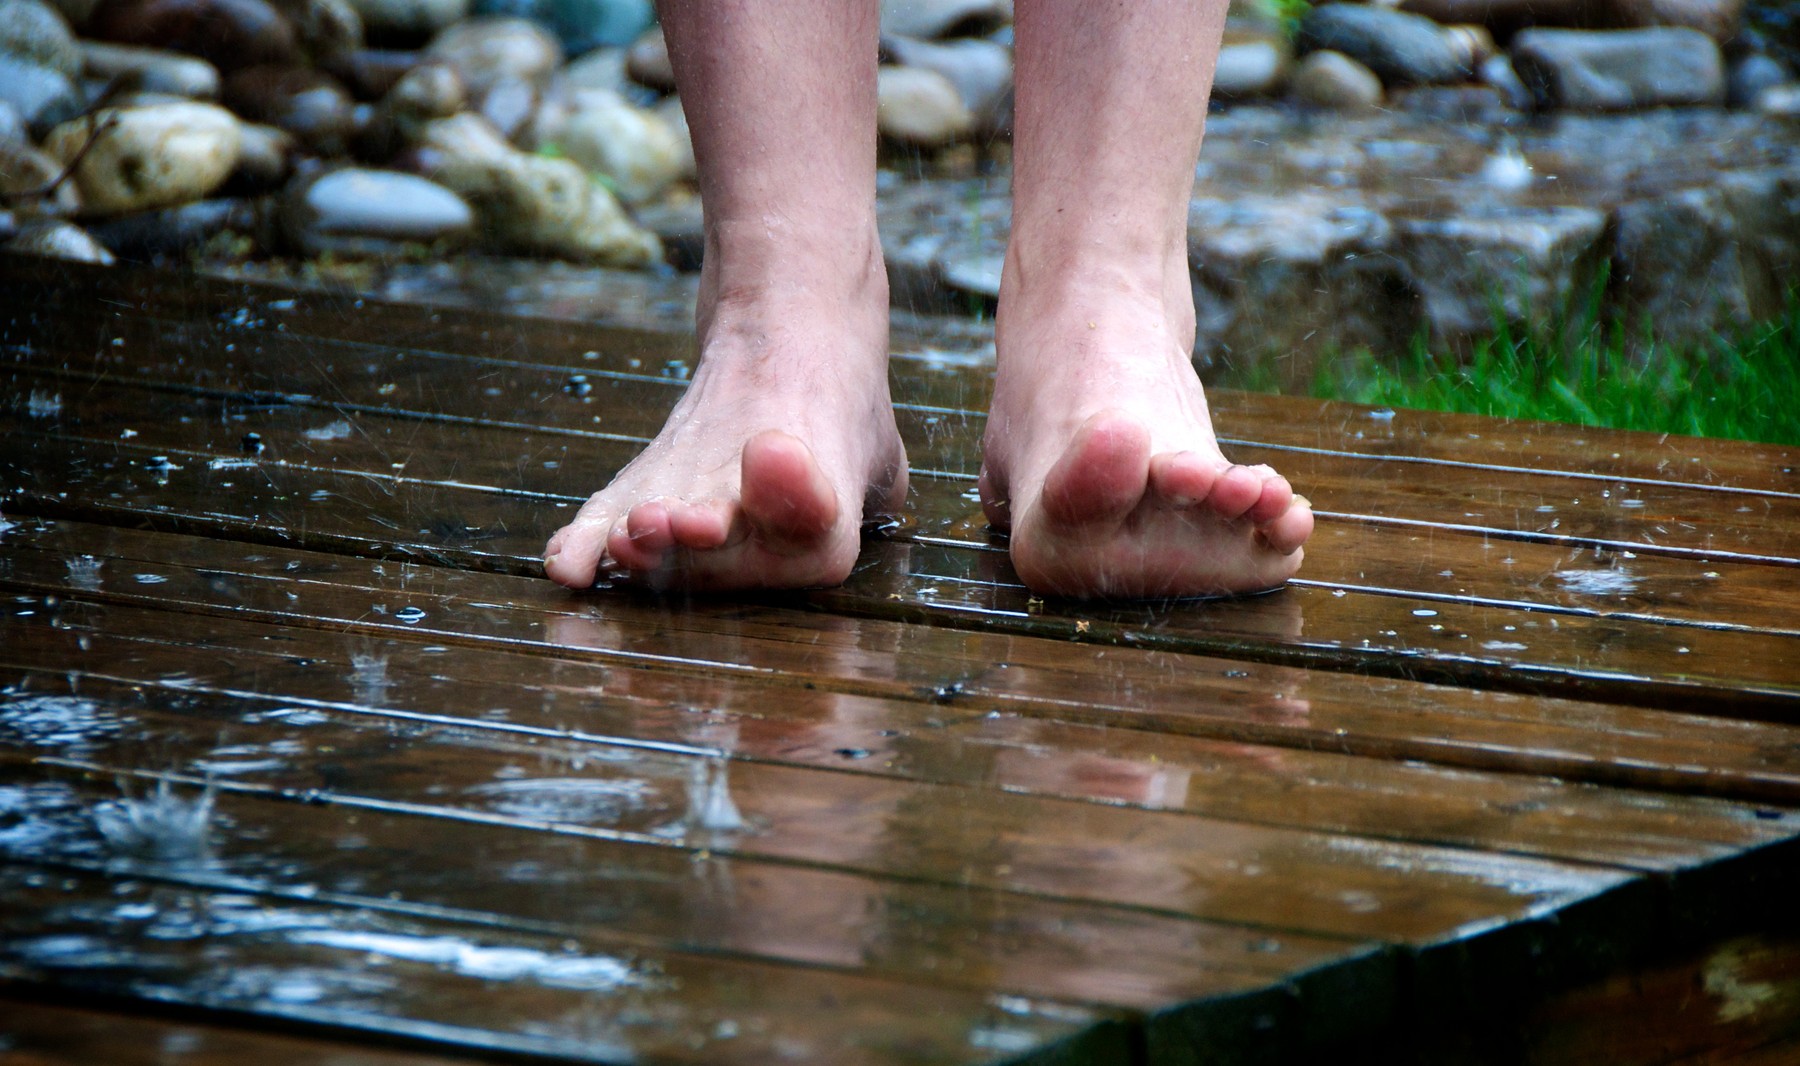 Feet on a wet wooden deck |  bark  -  Foter  -  CC BY 2.0